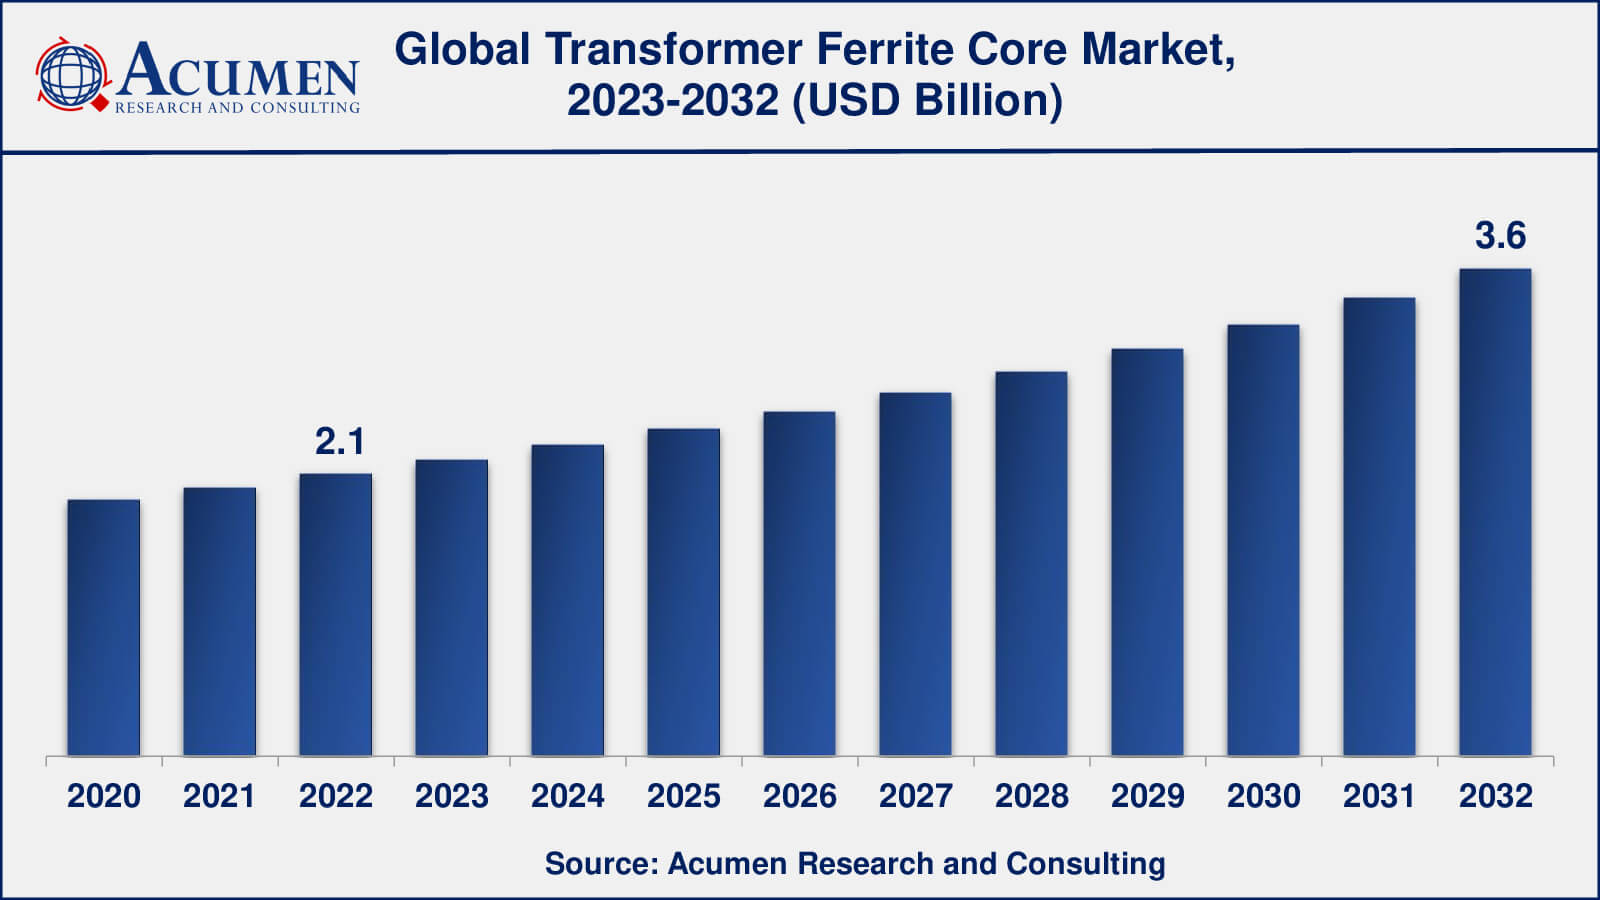 Transformer Ferrite Core Market Analysis Period